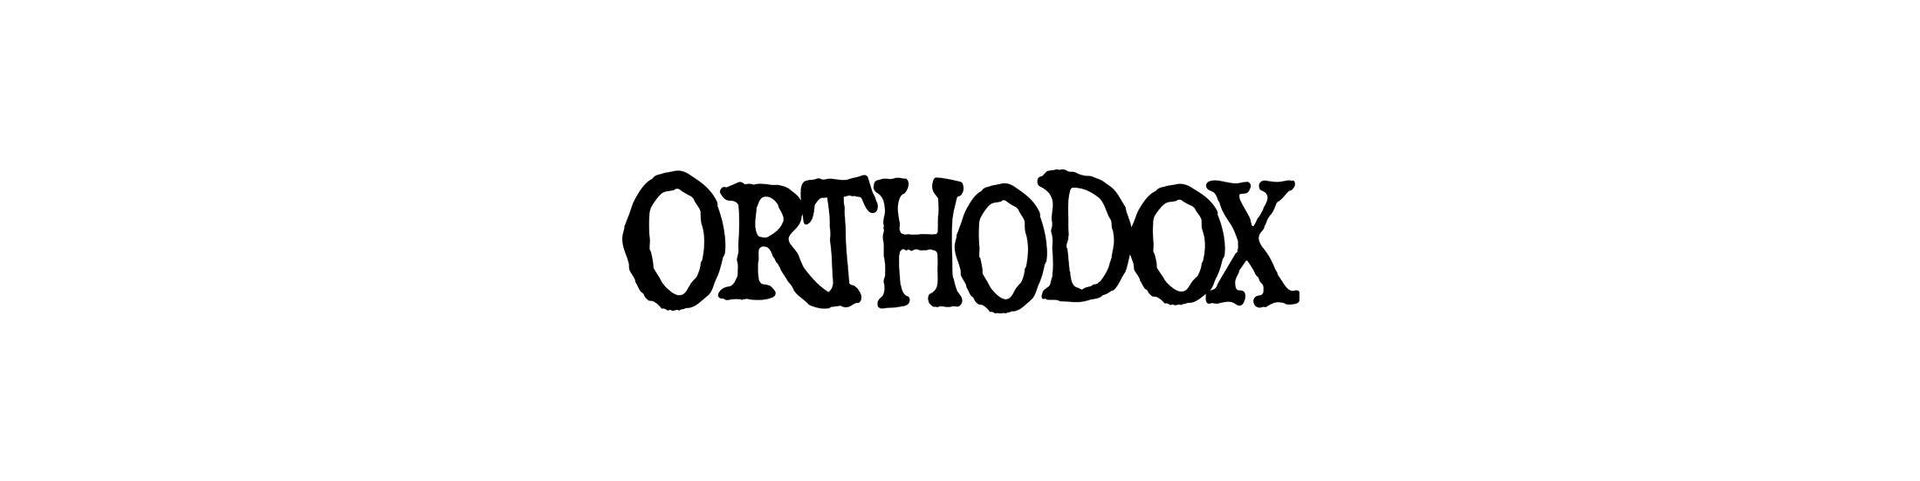 Shop – Orthodox – Band & Music Merch – Cold Cuts Merch